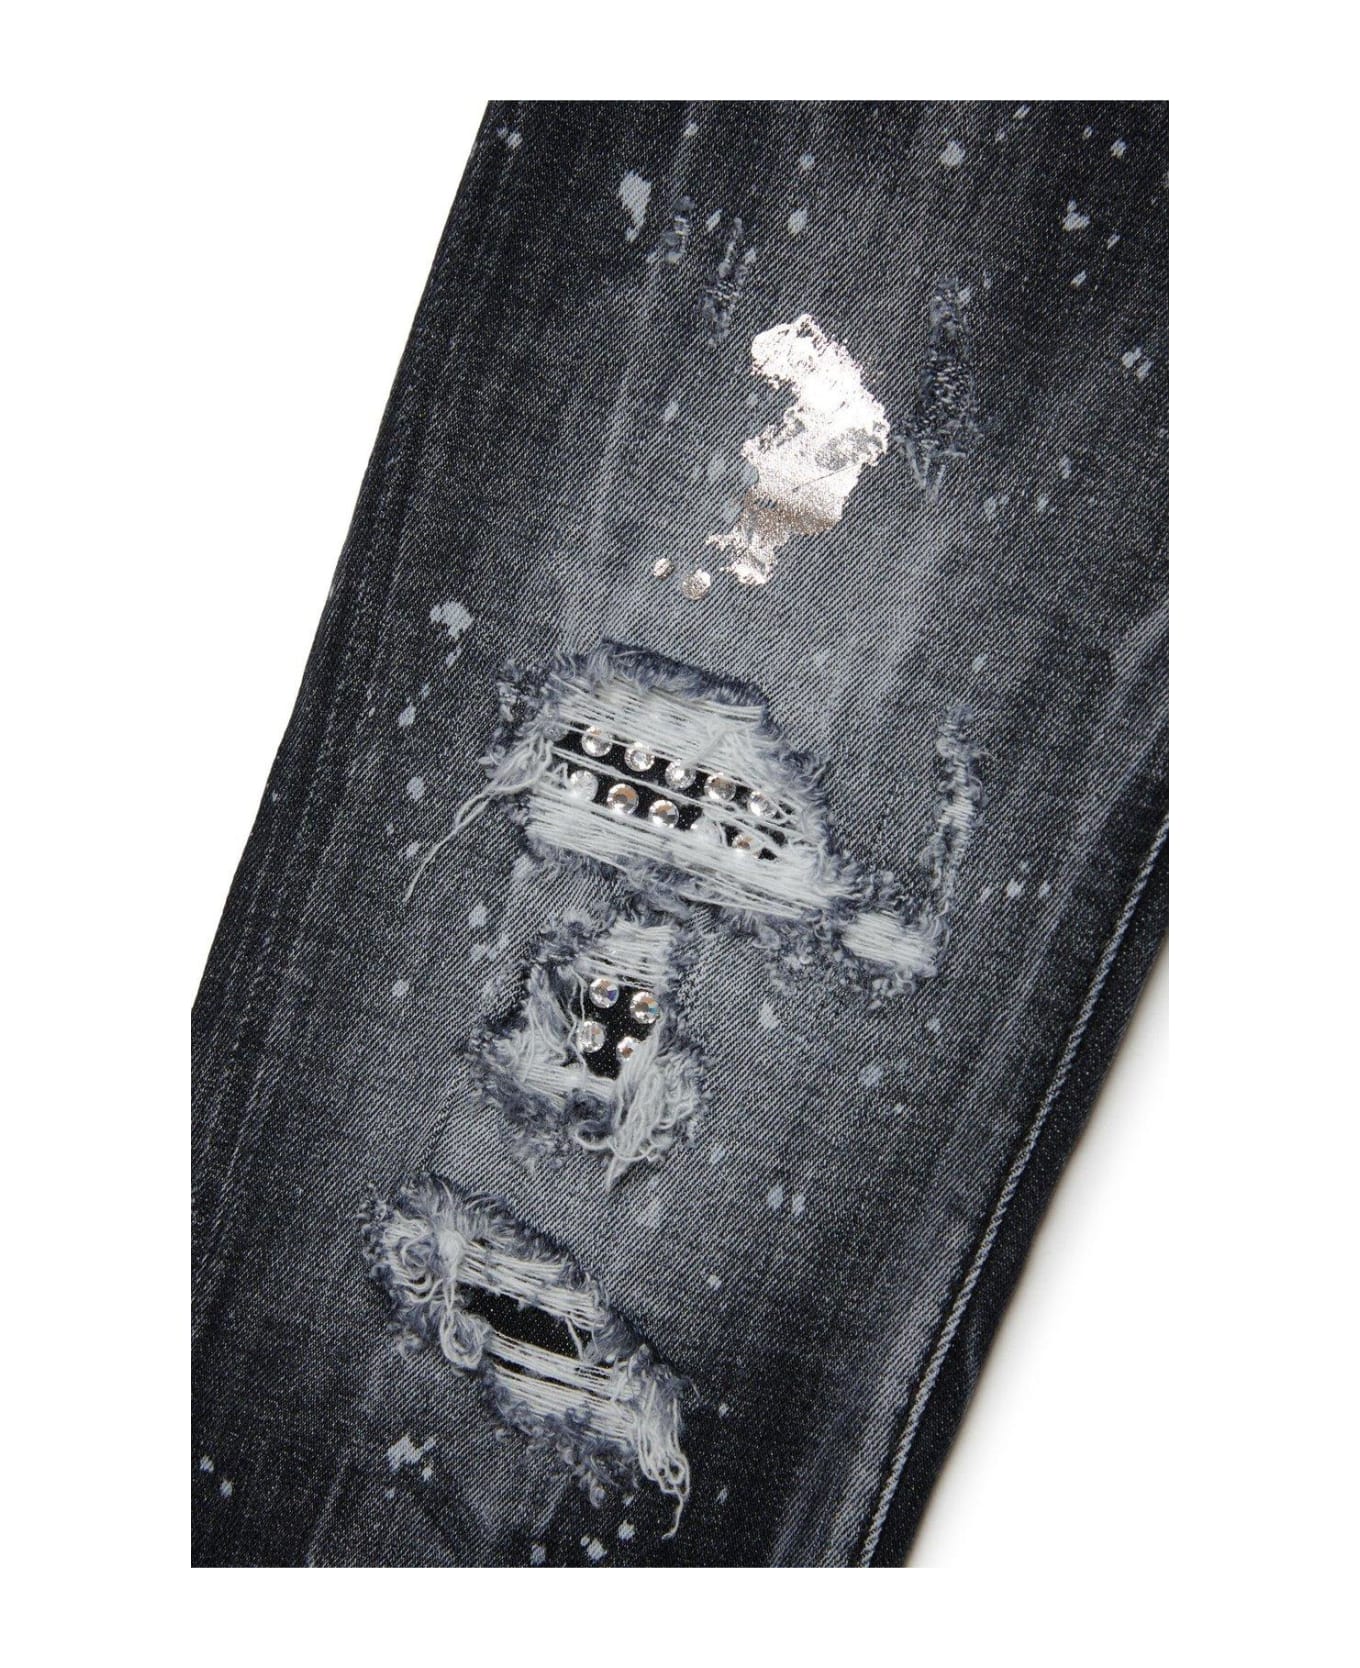 Dsquared2 Paint Splatter-detail Straight-leg Distressed Jeans - Denim Black ボトムス